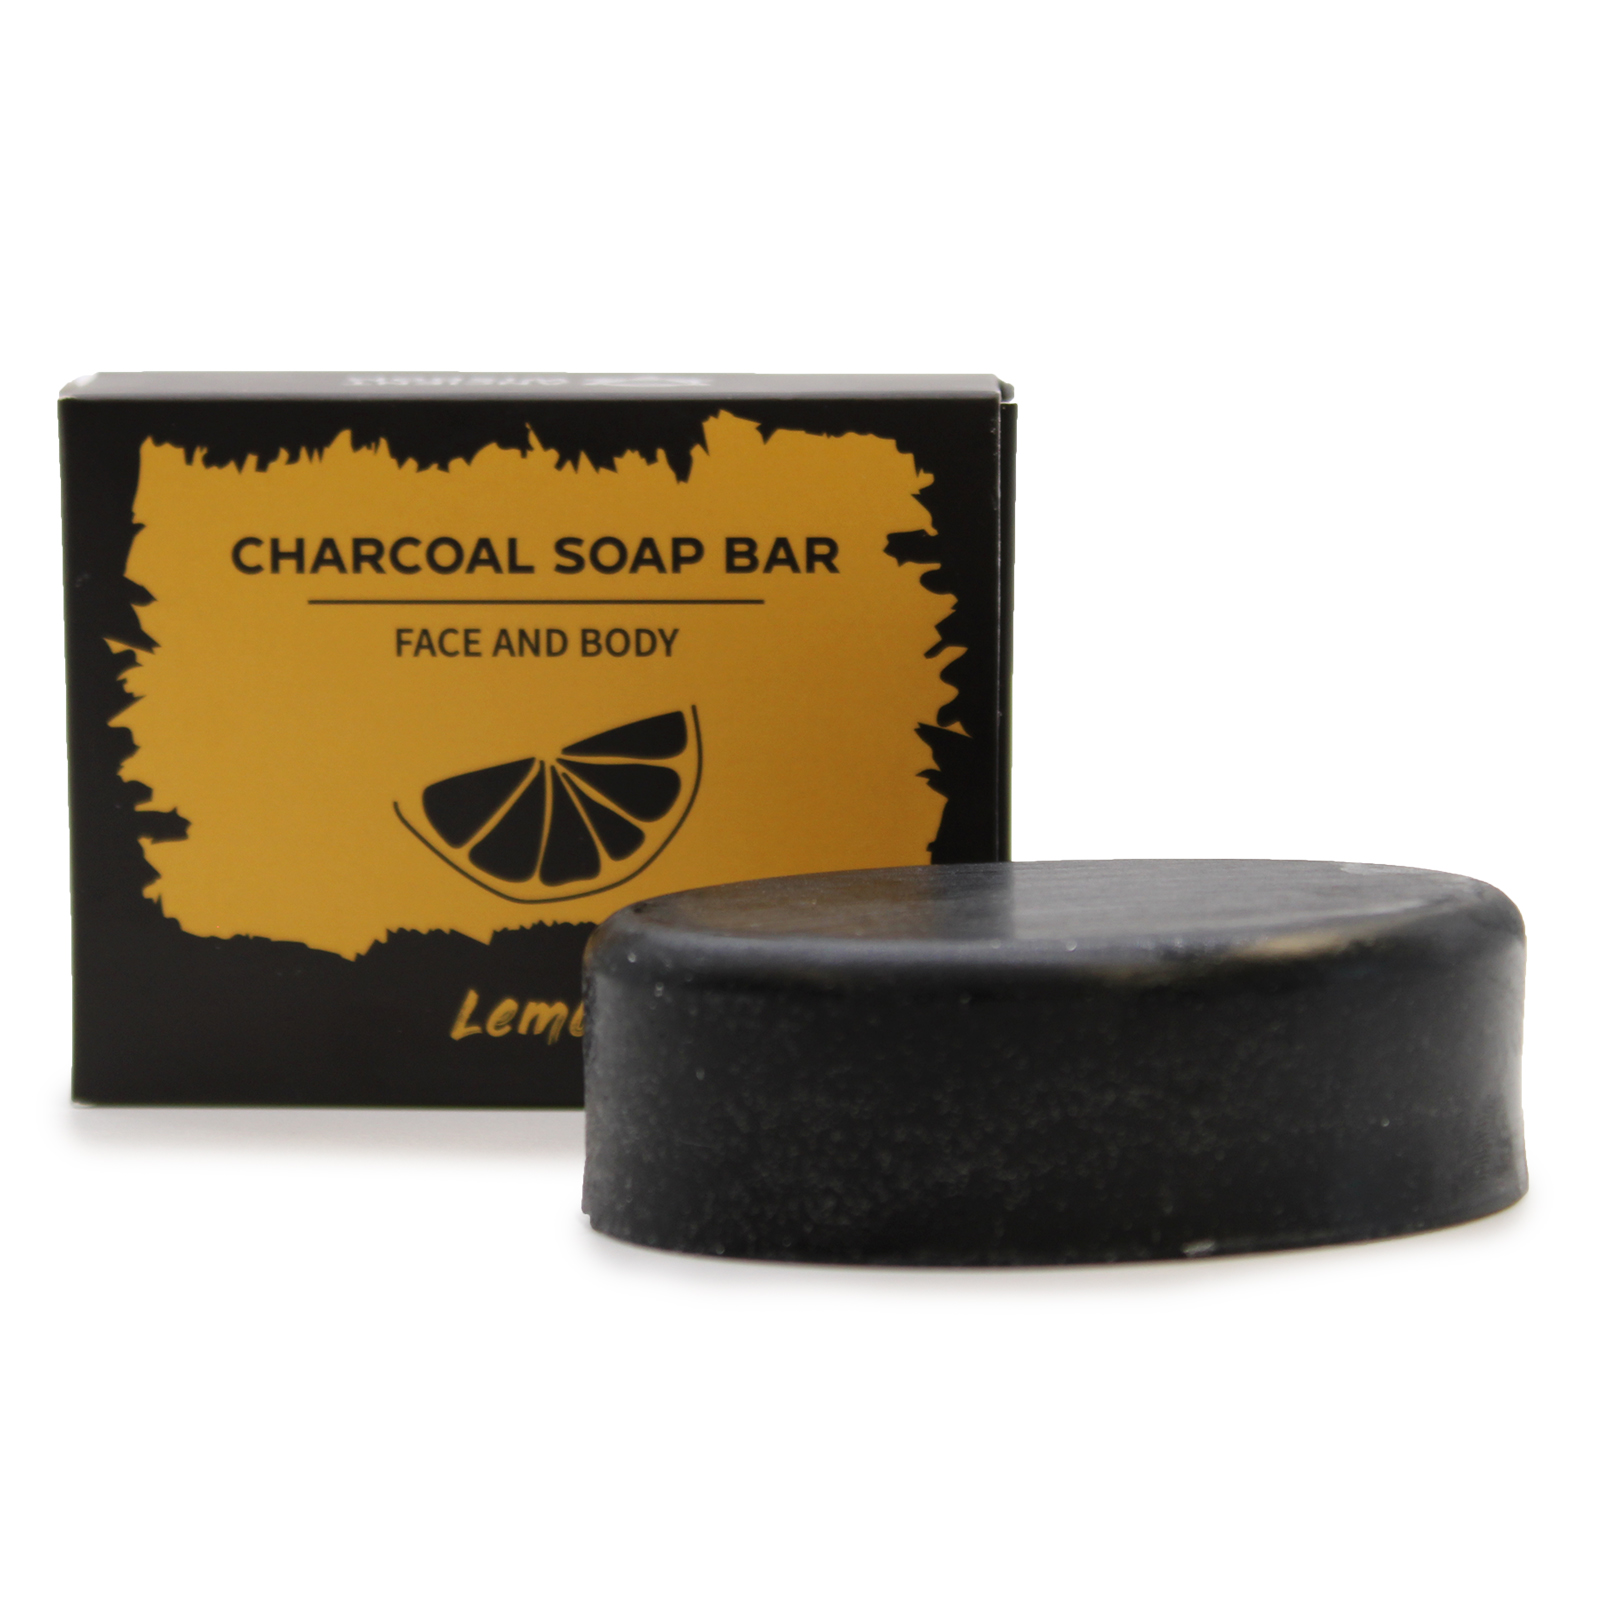 Charcoal Soap 85g - Lemon CHSB-01